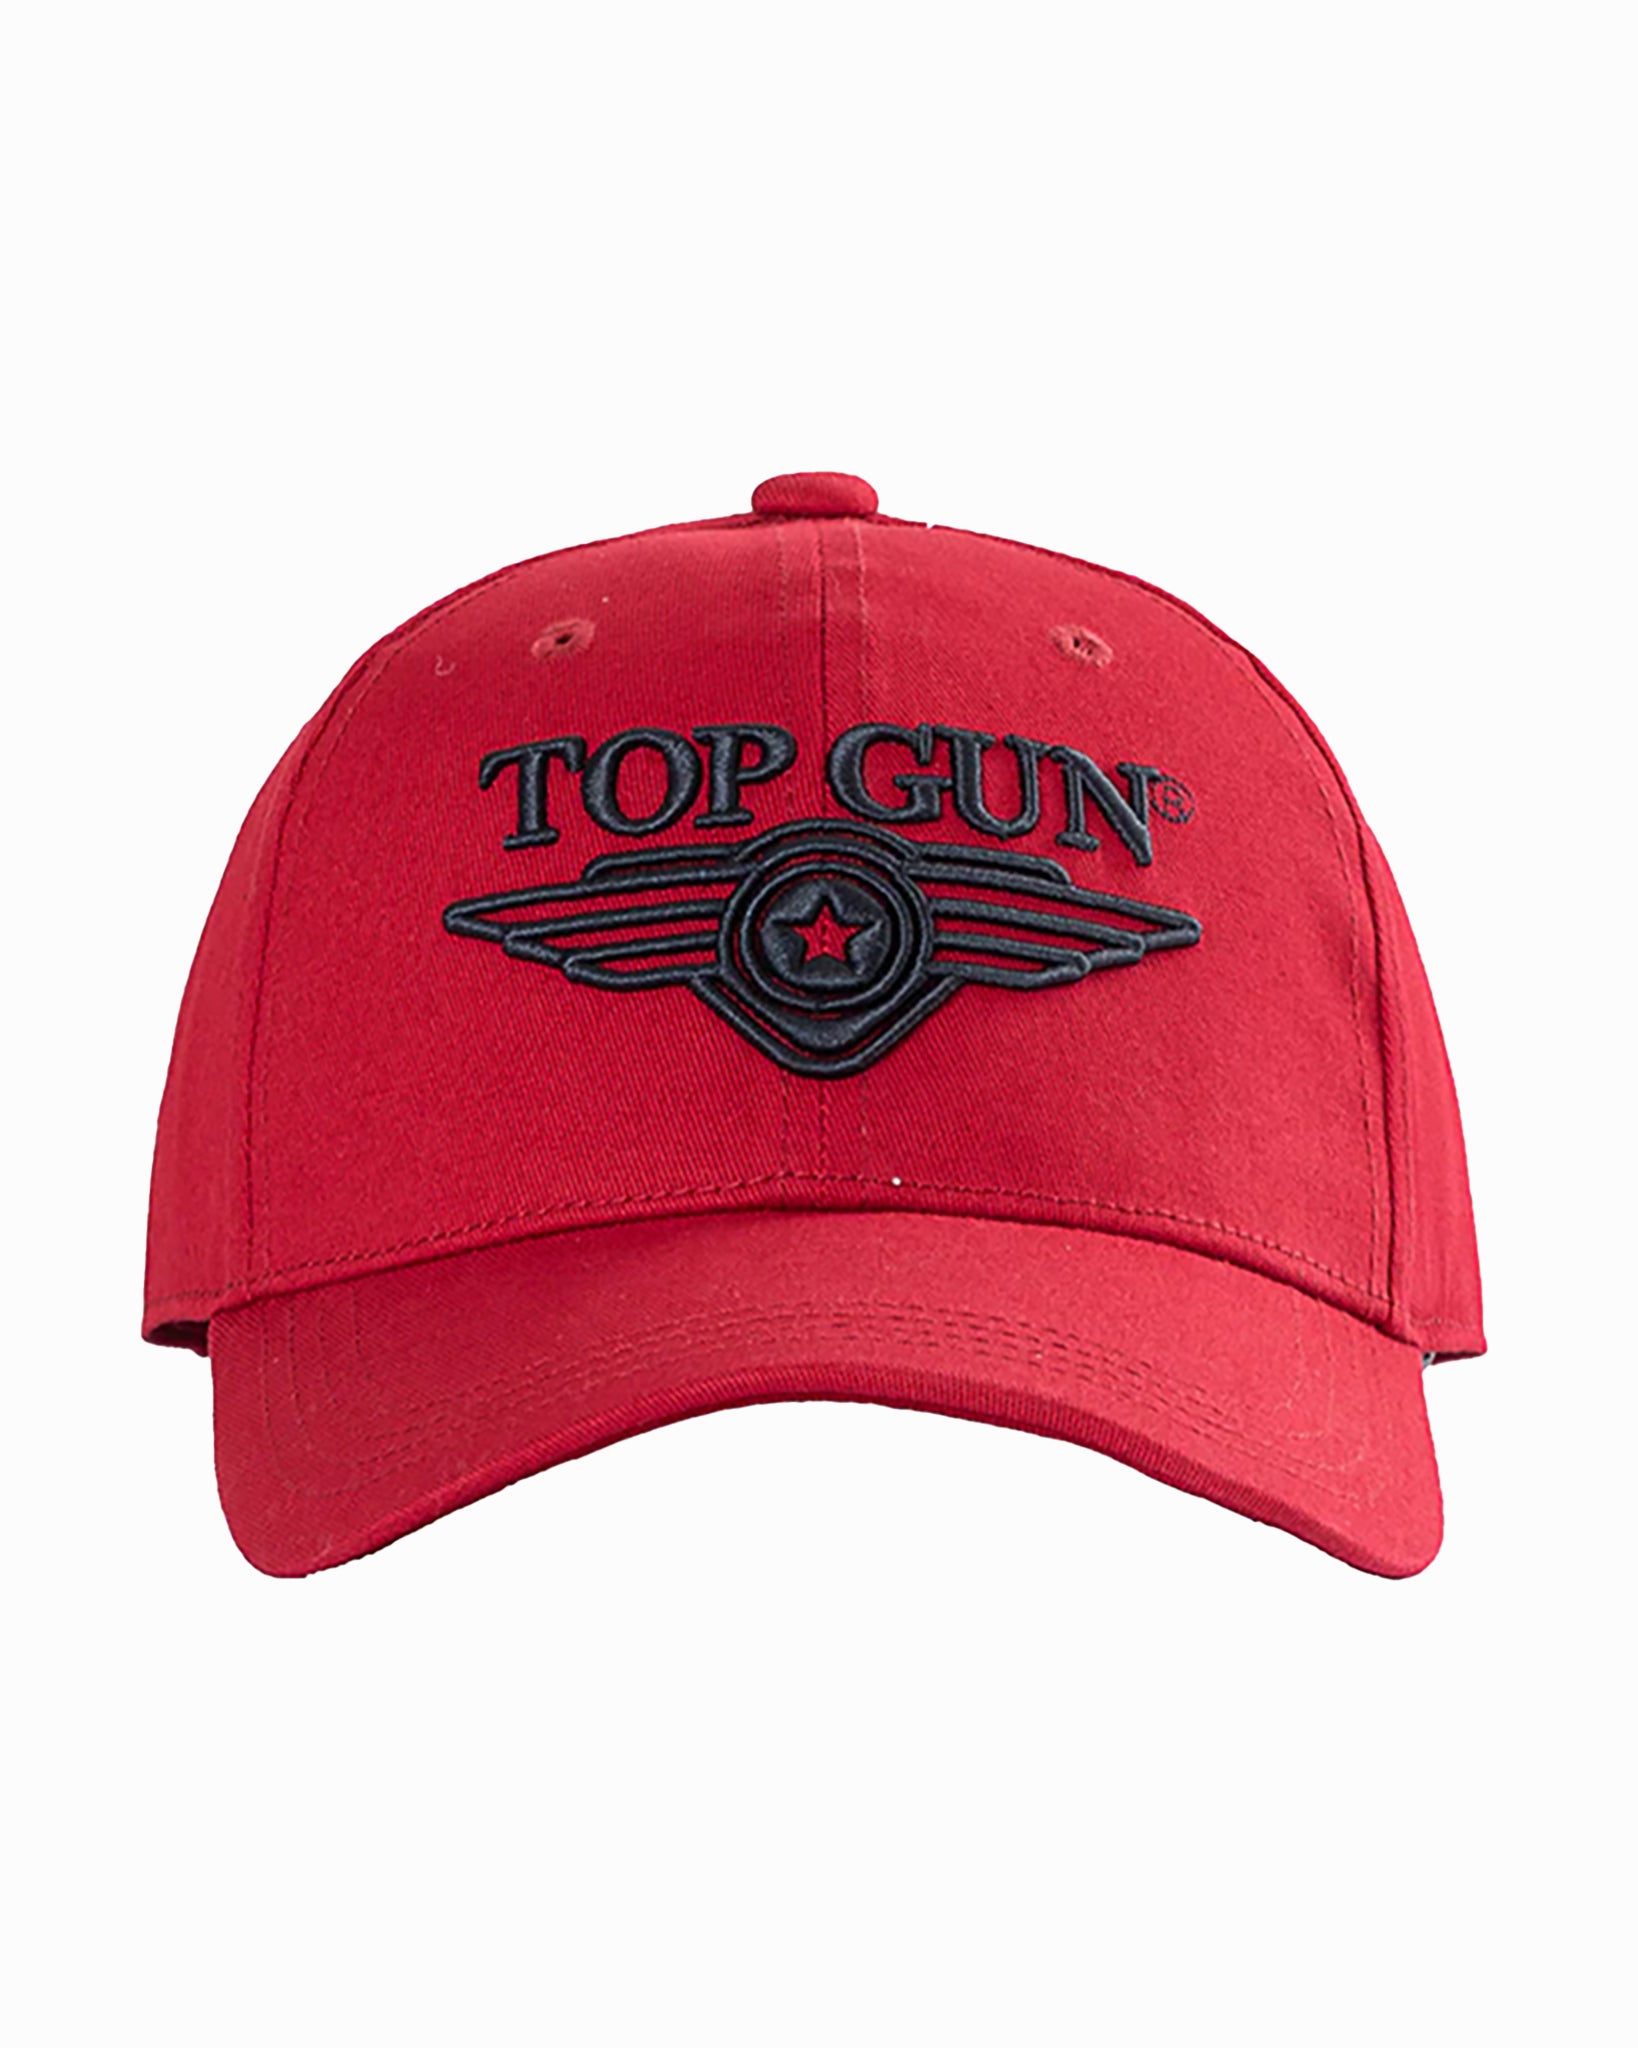 TOP GUN® 3D LOGO – Gun Store Top CAP